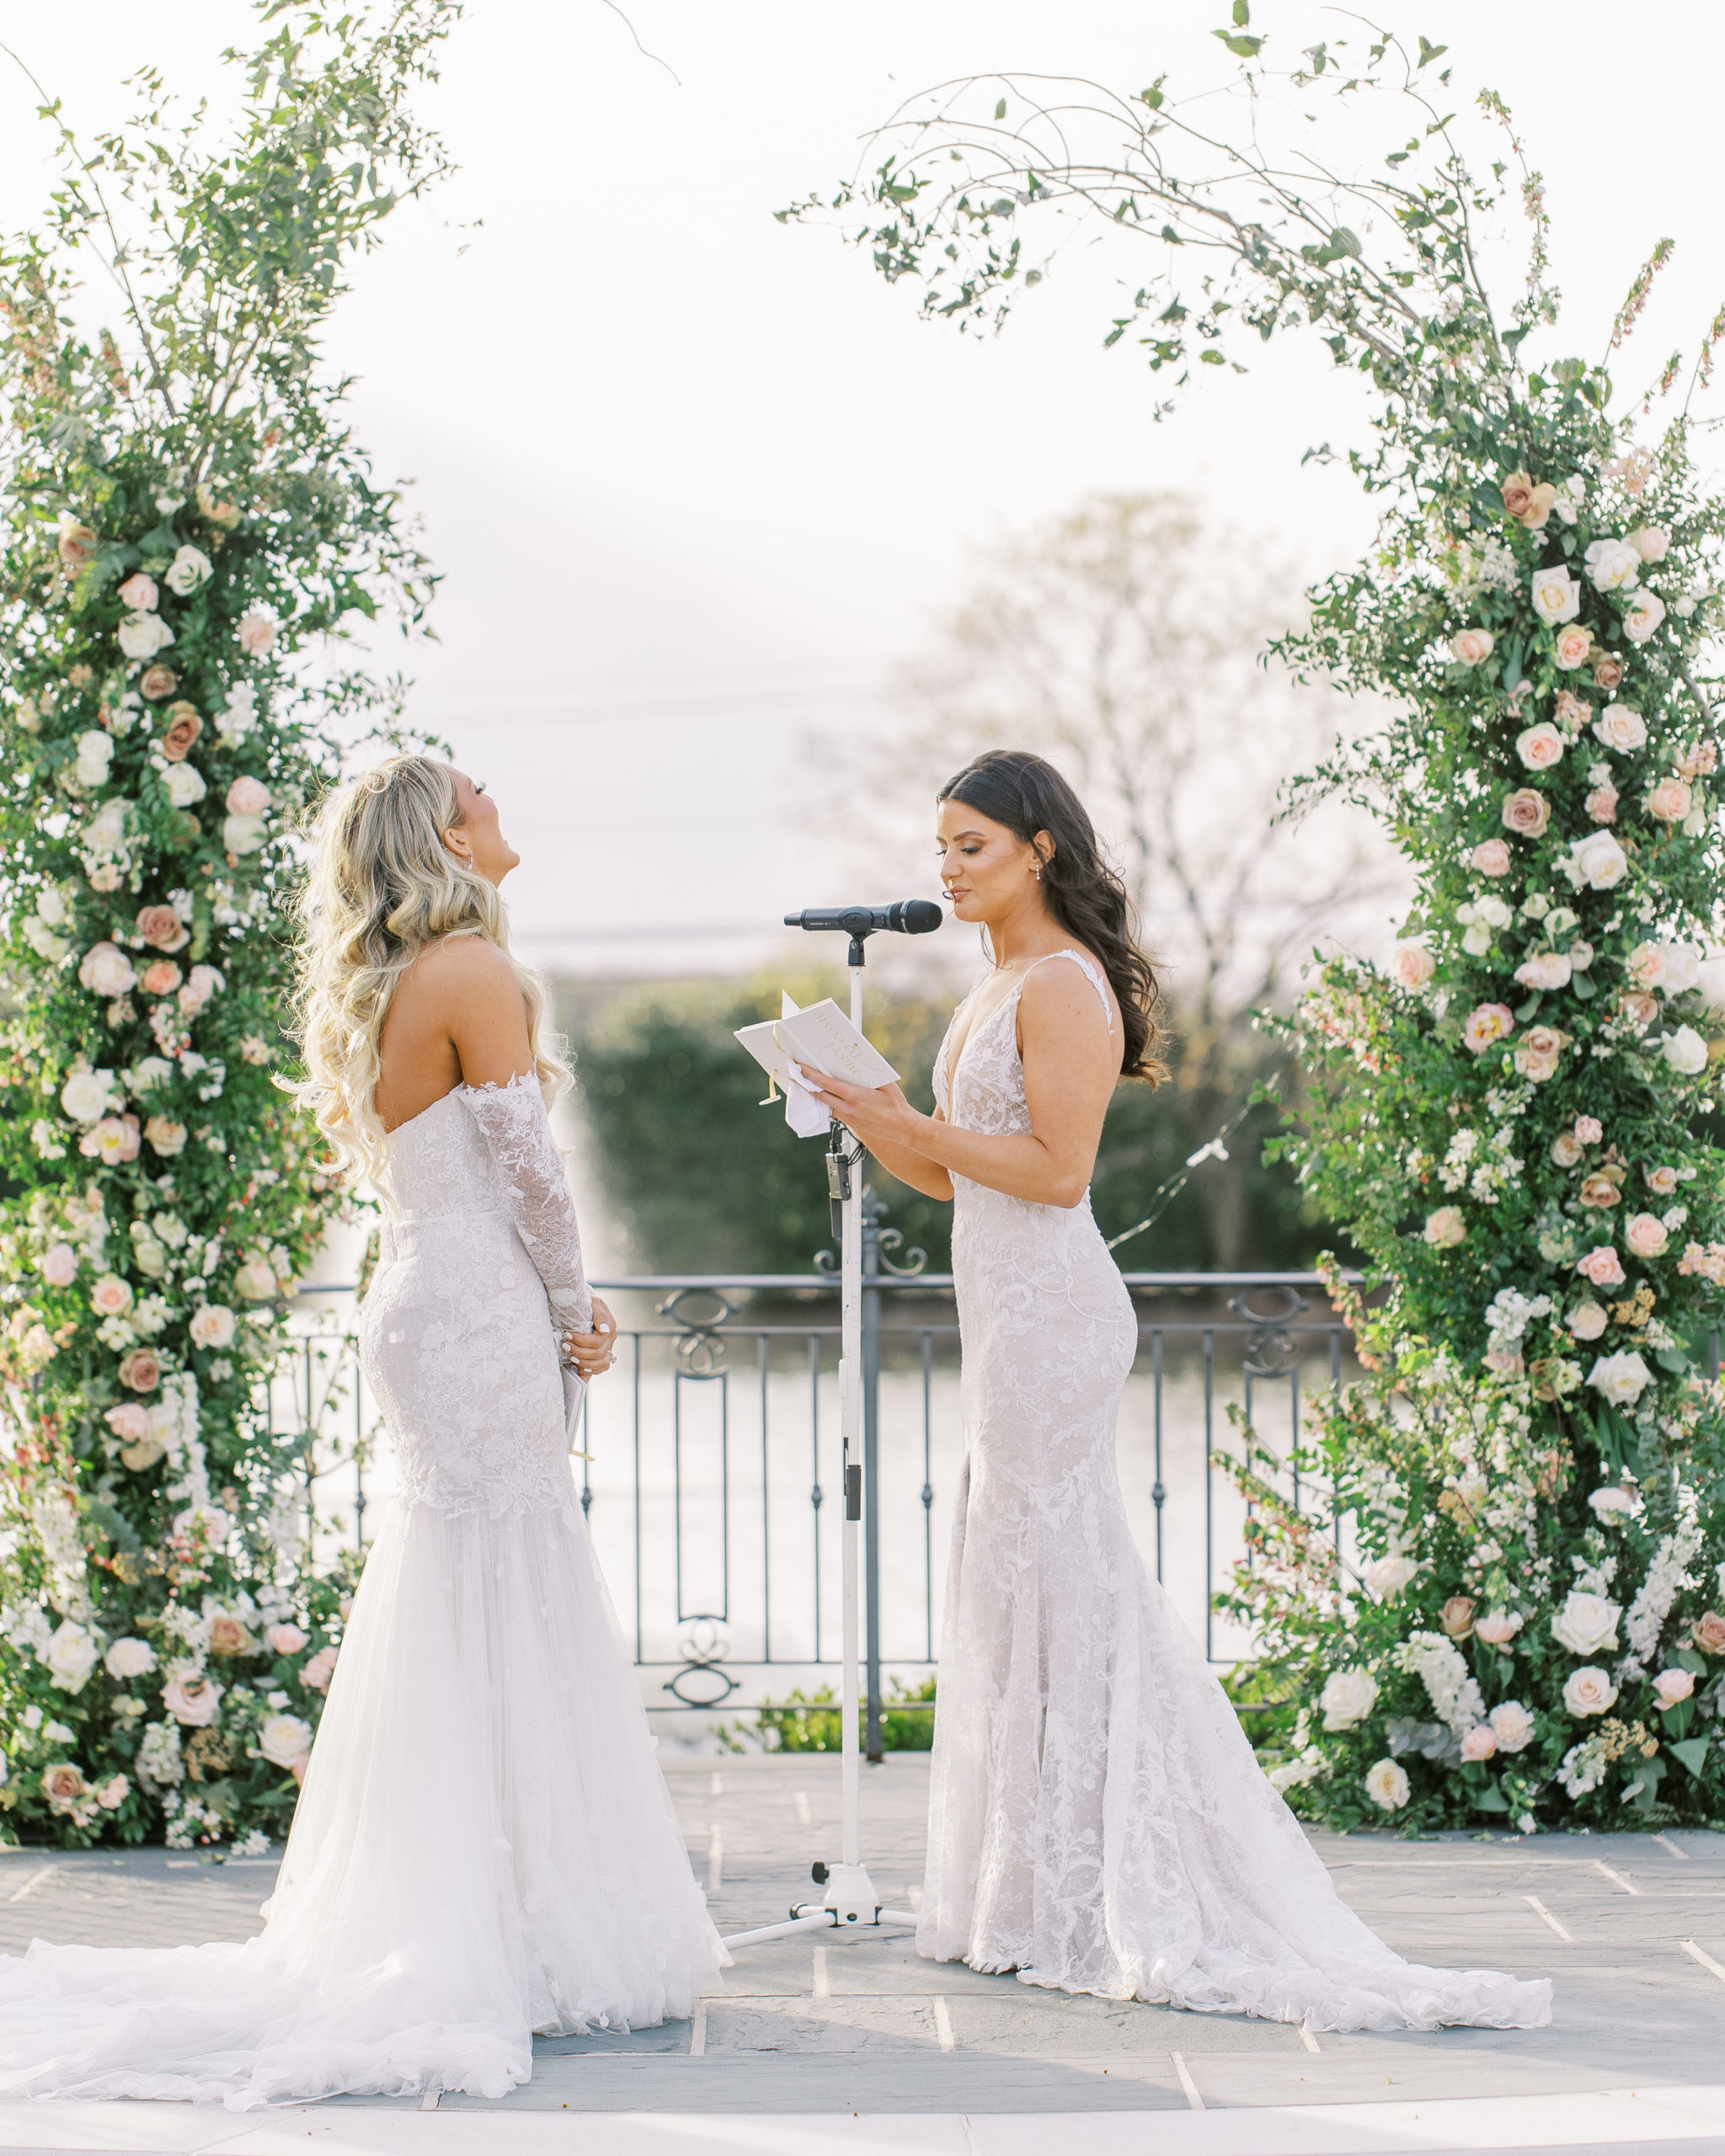 Brides read each other vows under rose arch 